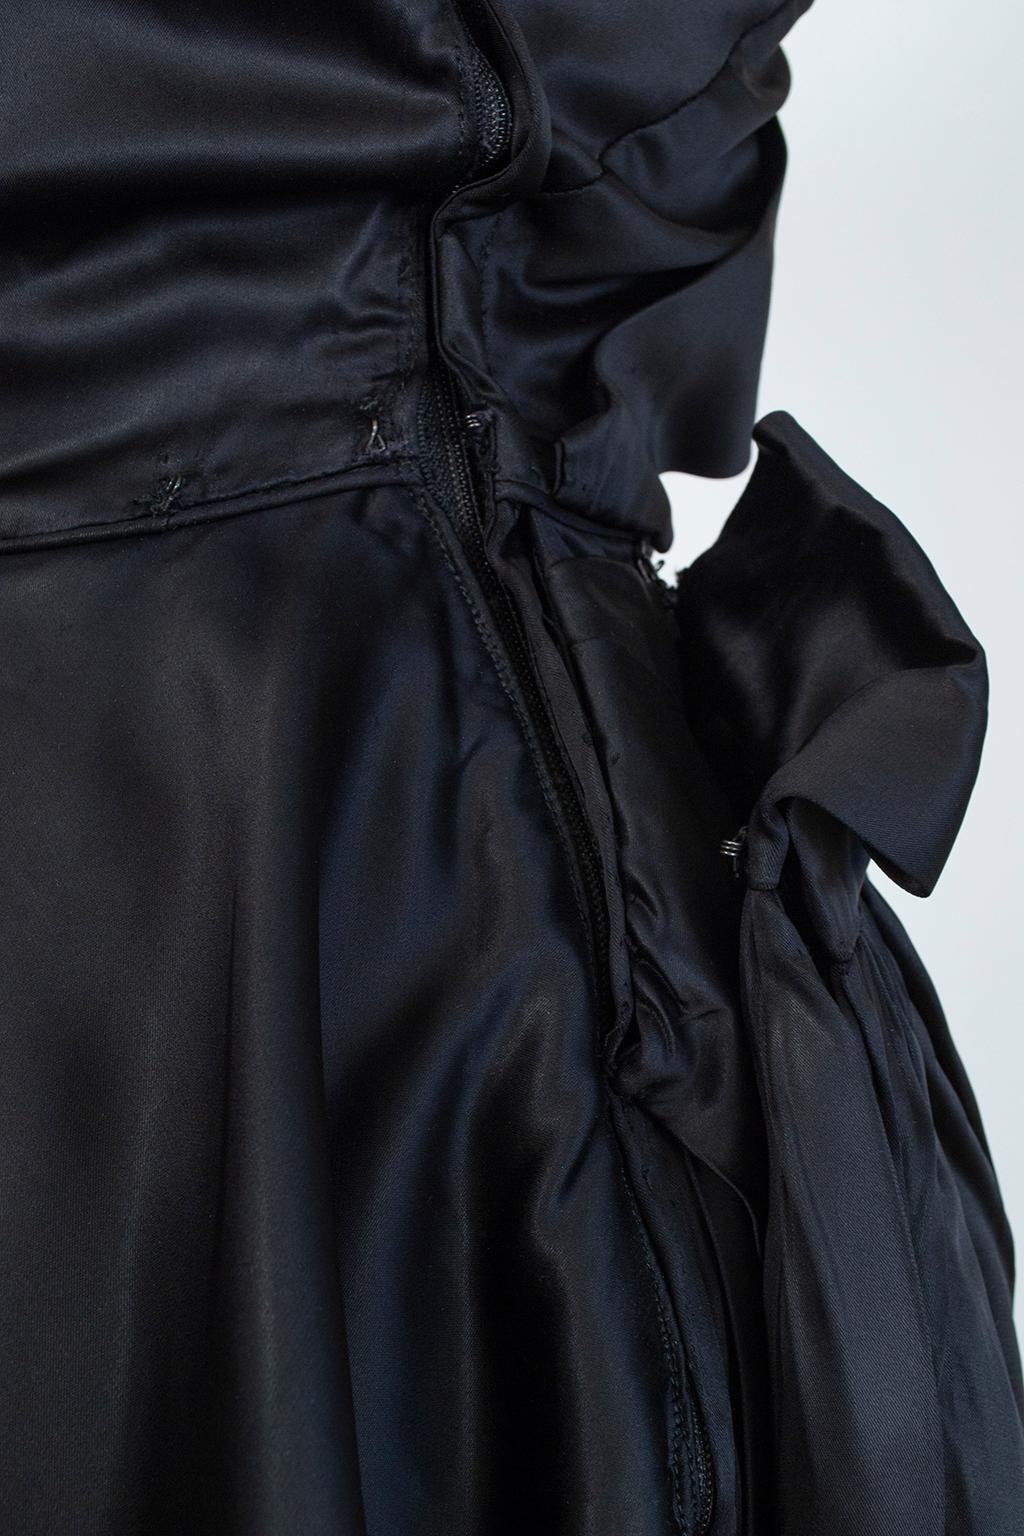 Black Satin Asymmetrical Mermaid Peplum Gown with Detachable Hip Sash- XS, 1950s 7